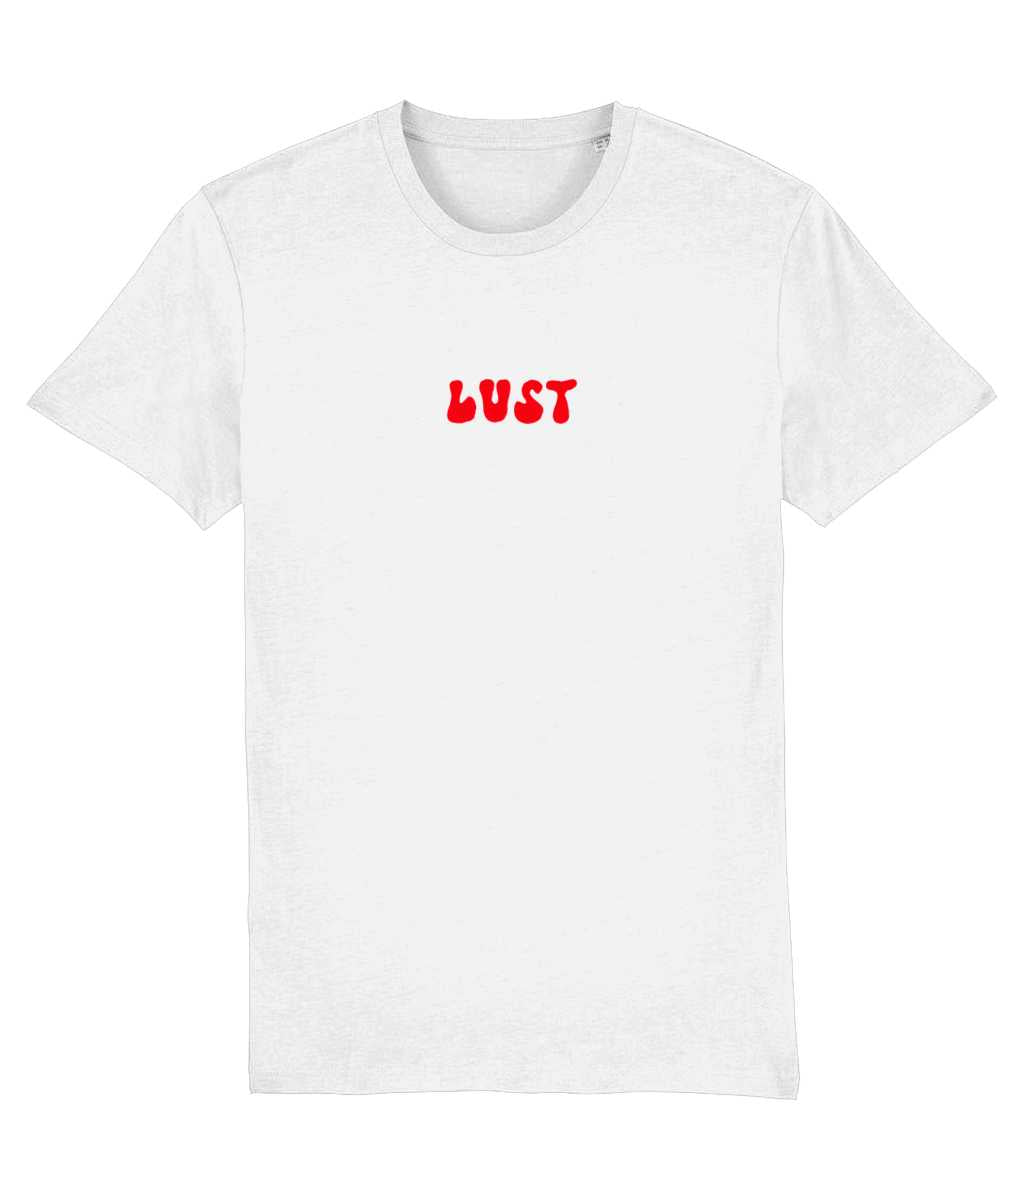 Lust non gender organic T-shirt Cherchez La Femme brand